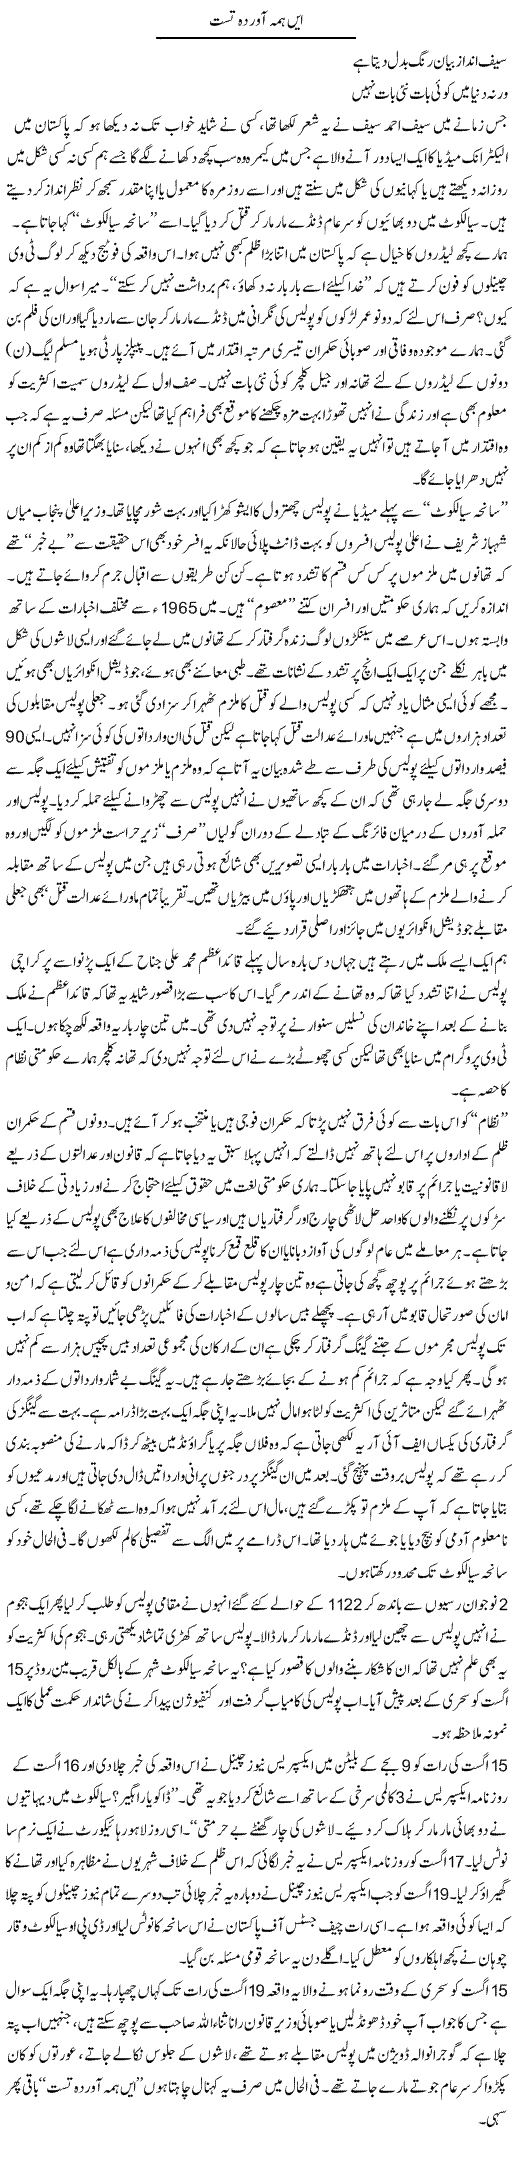 Hama Awar Express Column Abbas Athar 26 August 2010